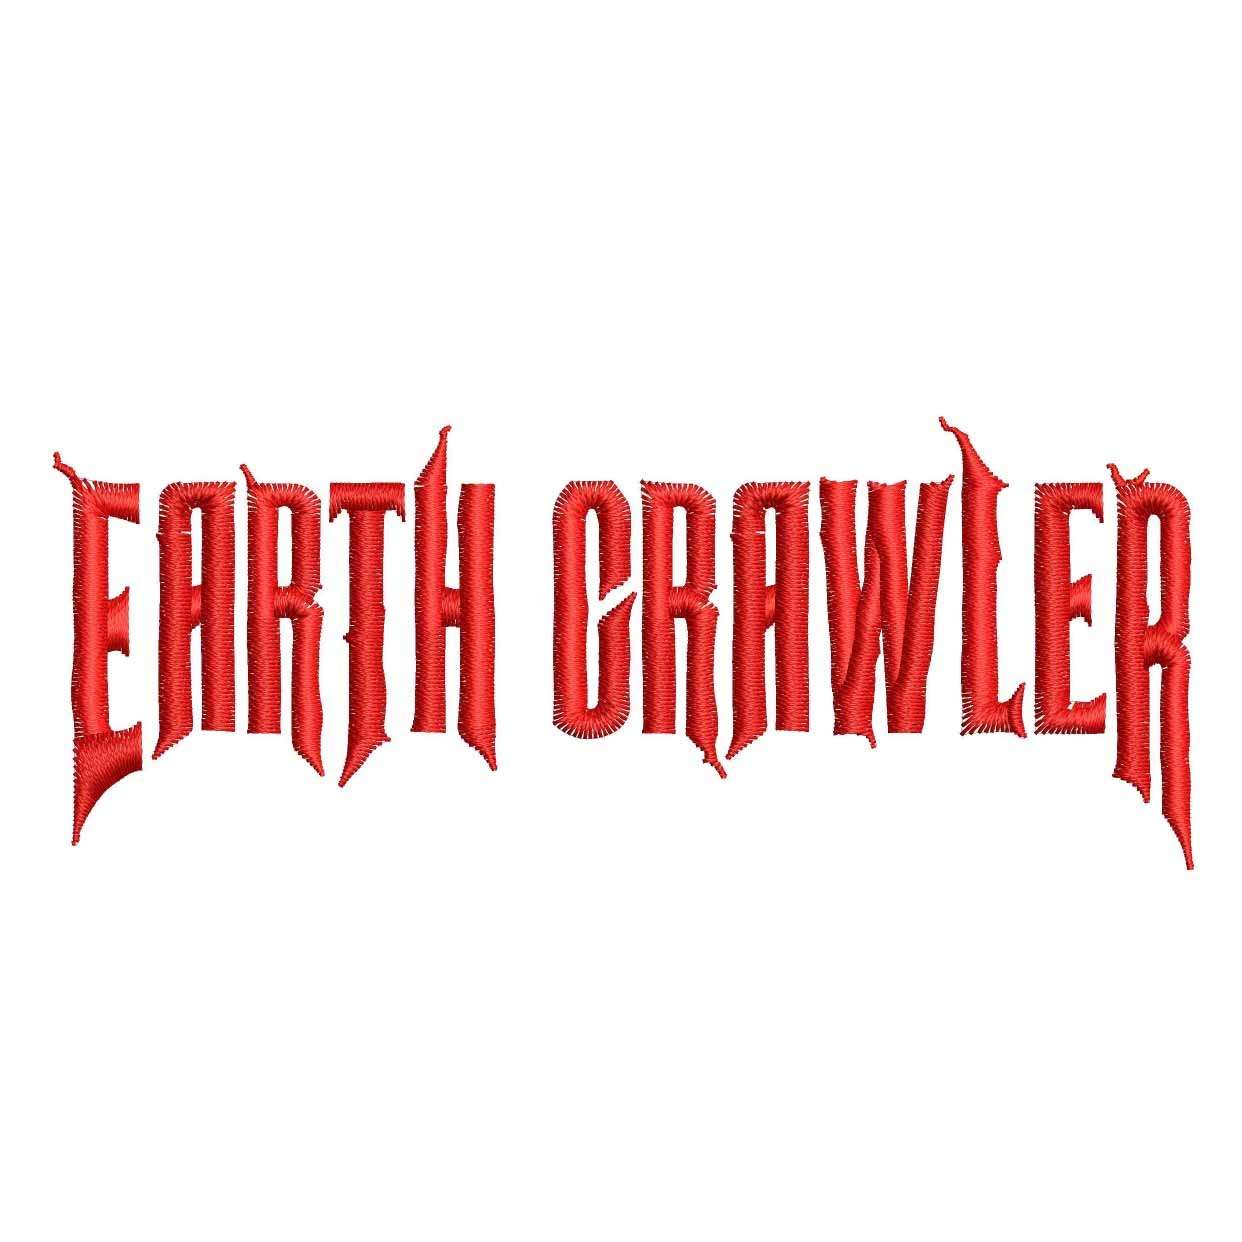 EARTH CRAWLER 3-8 INCH